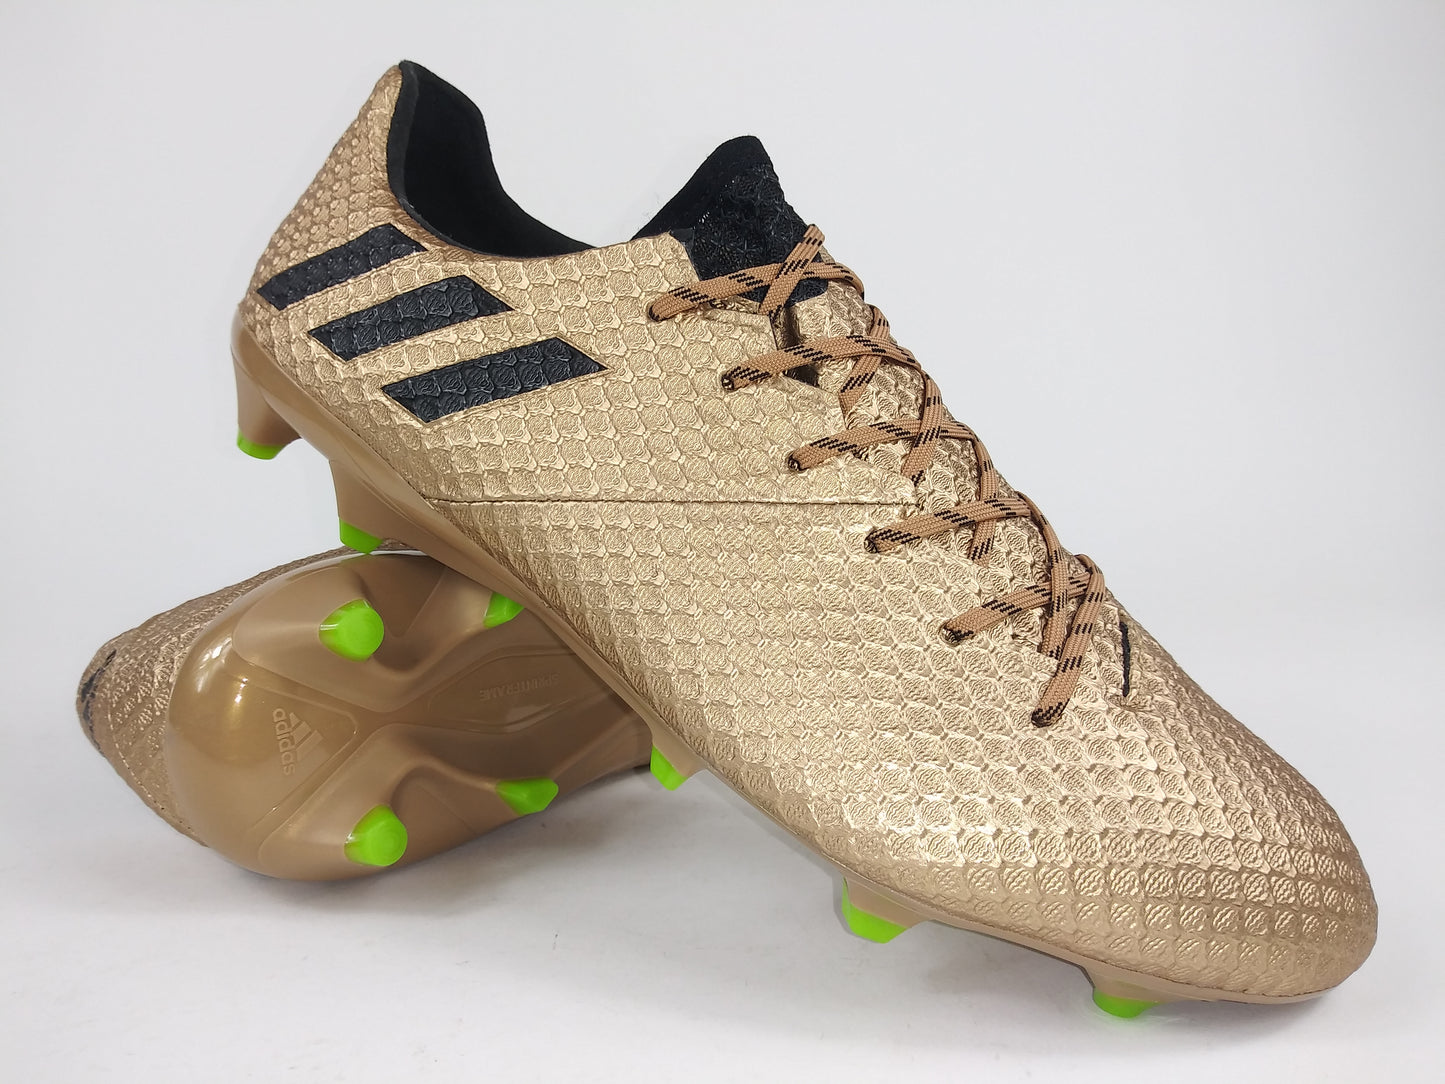 Adidas Messi 16 1 Fg Brown Gold Villegas Footwear